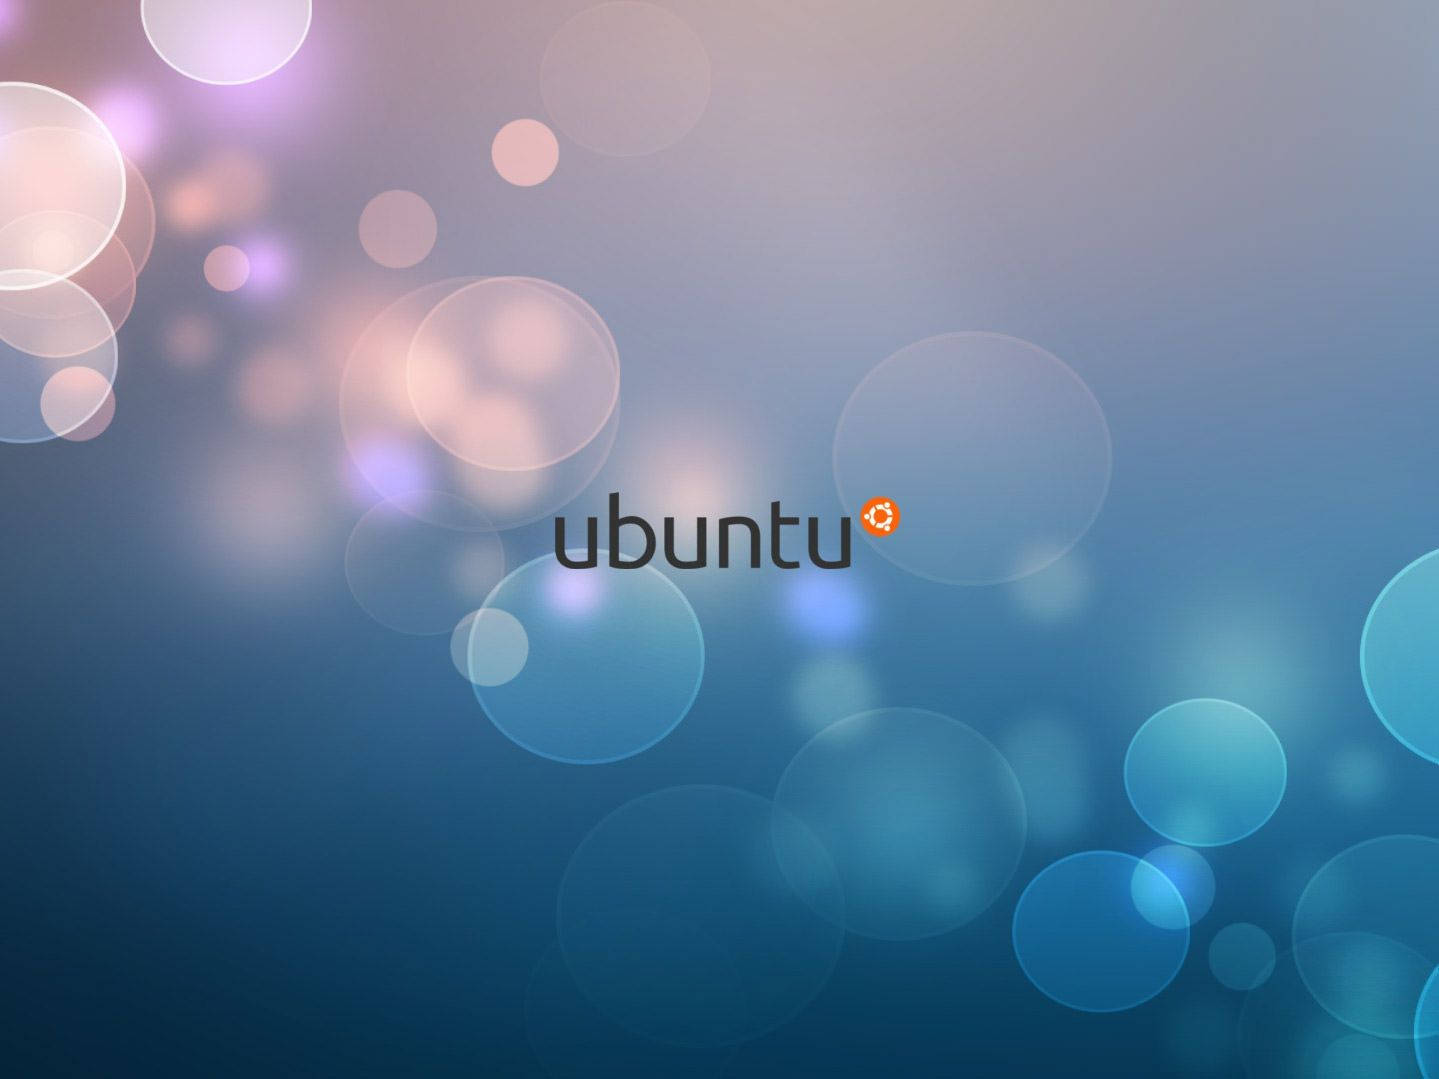 Ubuntu Circles Desktop Wallpaper